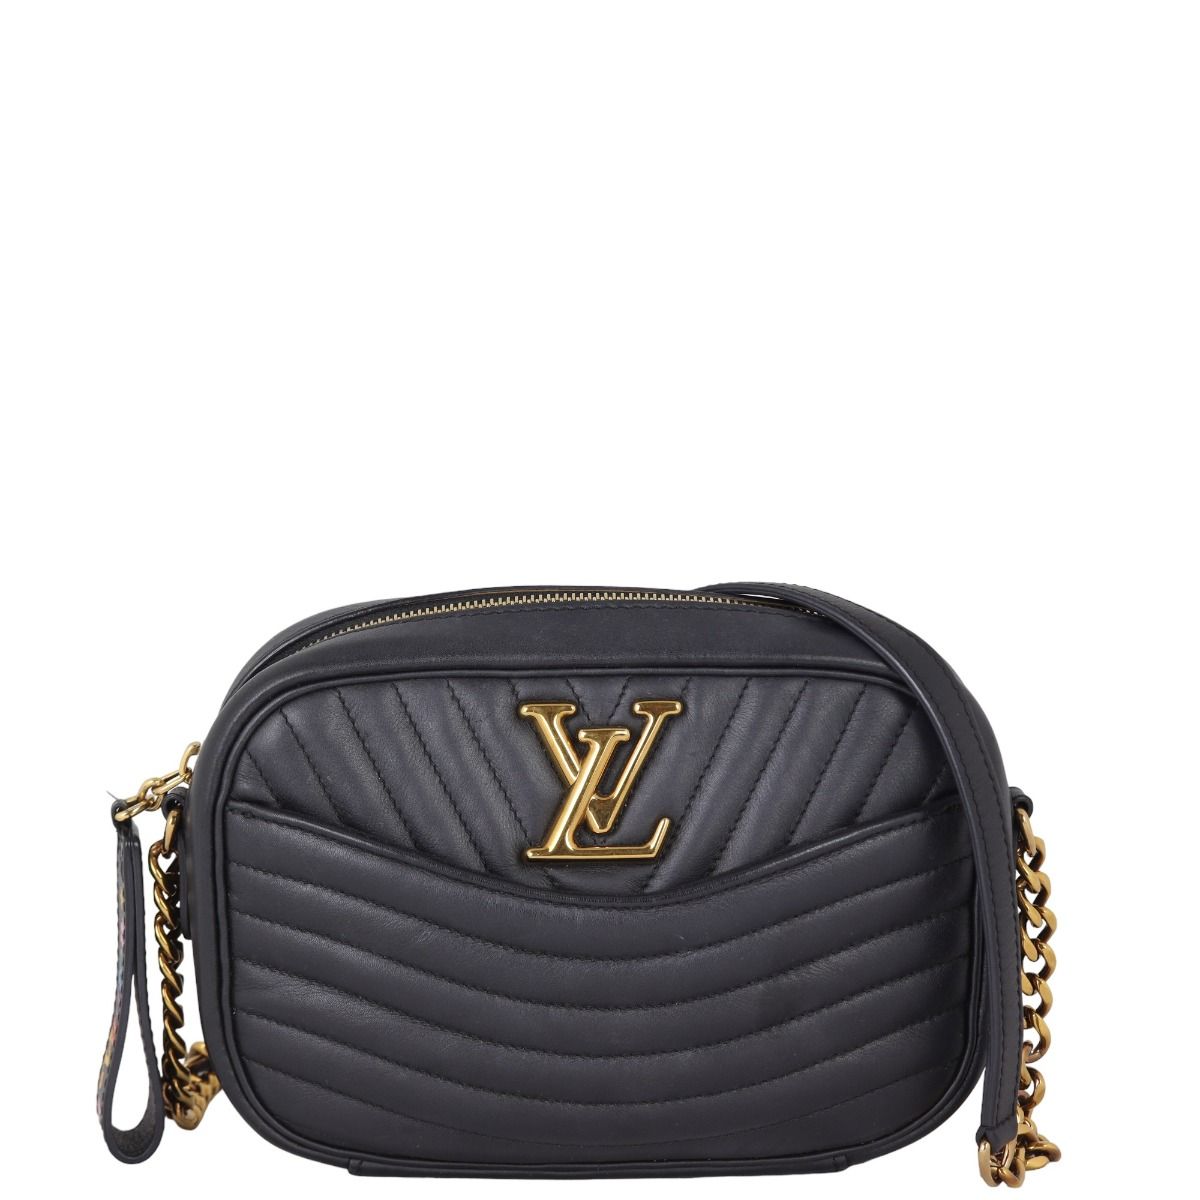 Shop Louis Vuitton Bags (LVU6Q6Y7BLUZZZZZ00) by PinkMimosa